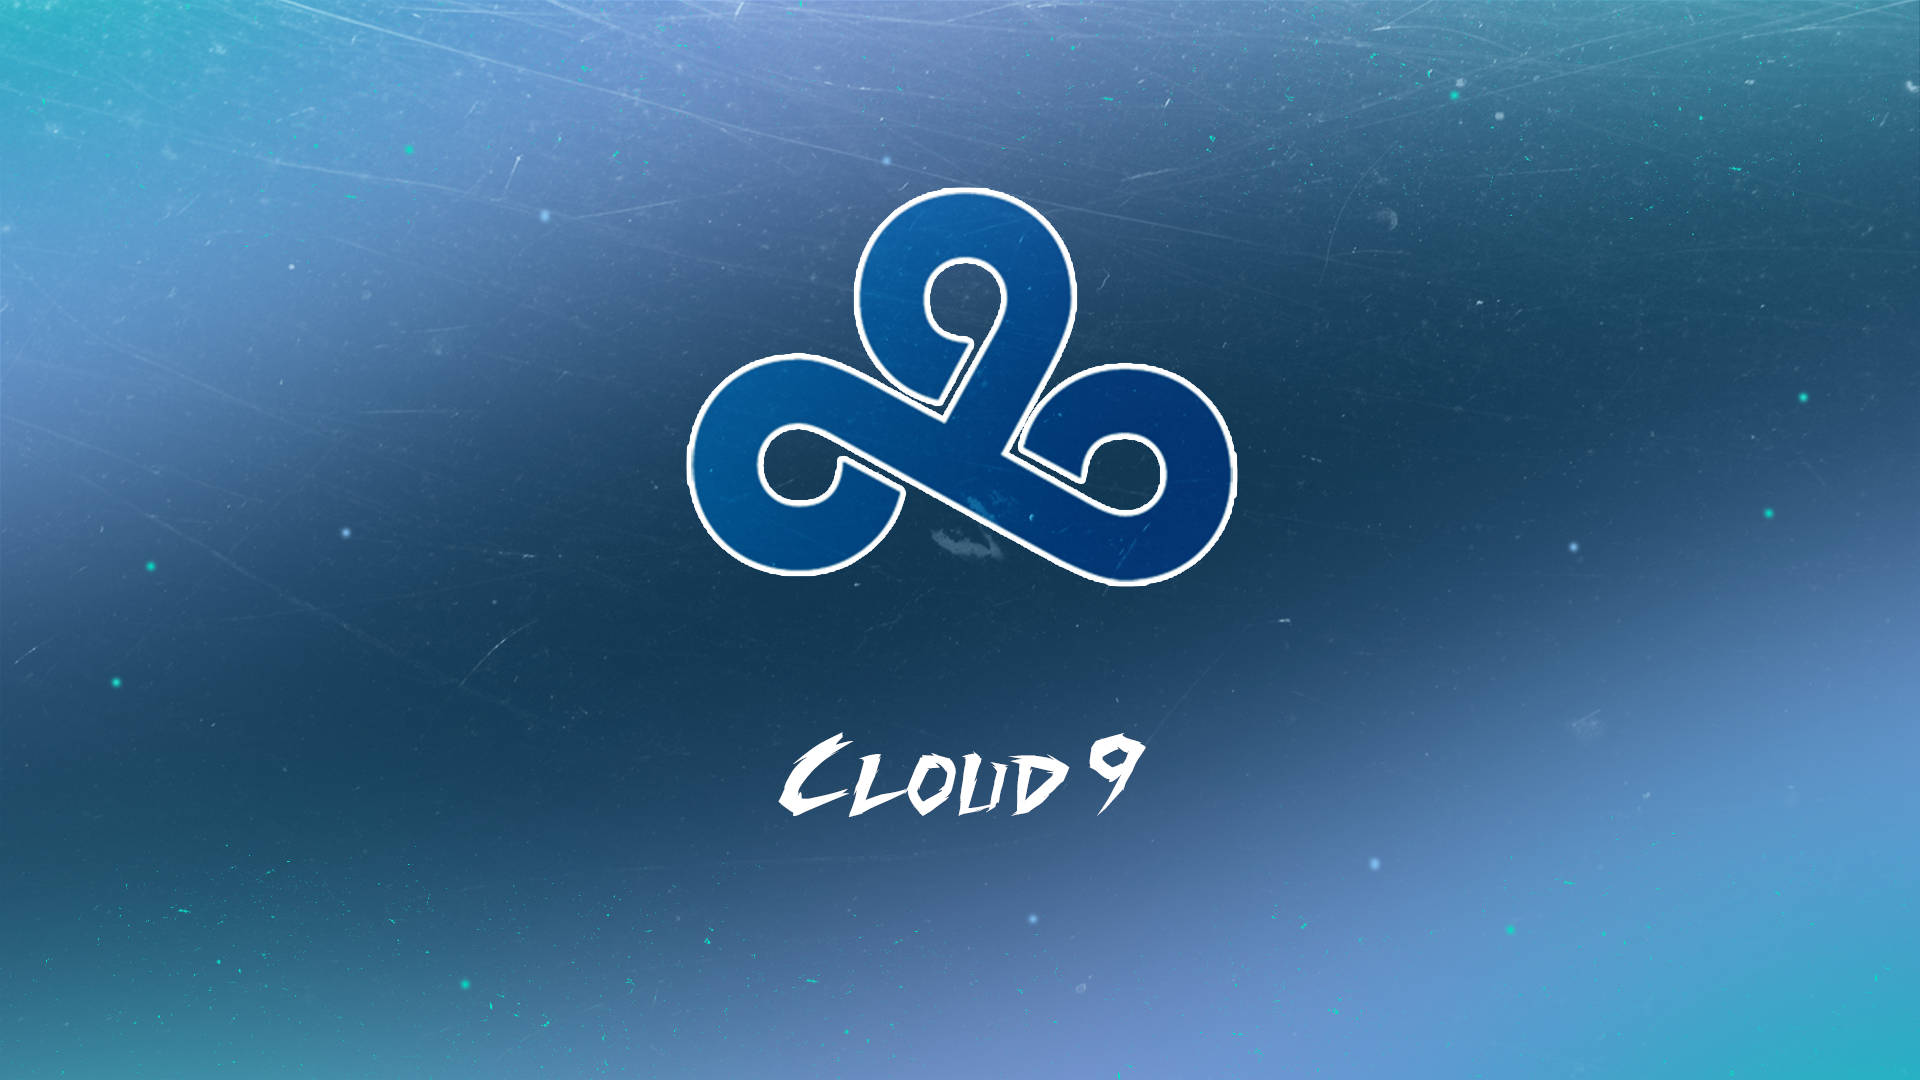 Cloud9 Multicolored Galaxy Logo Wallpaper